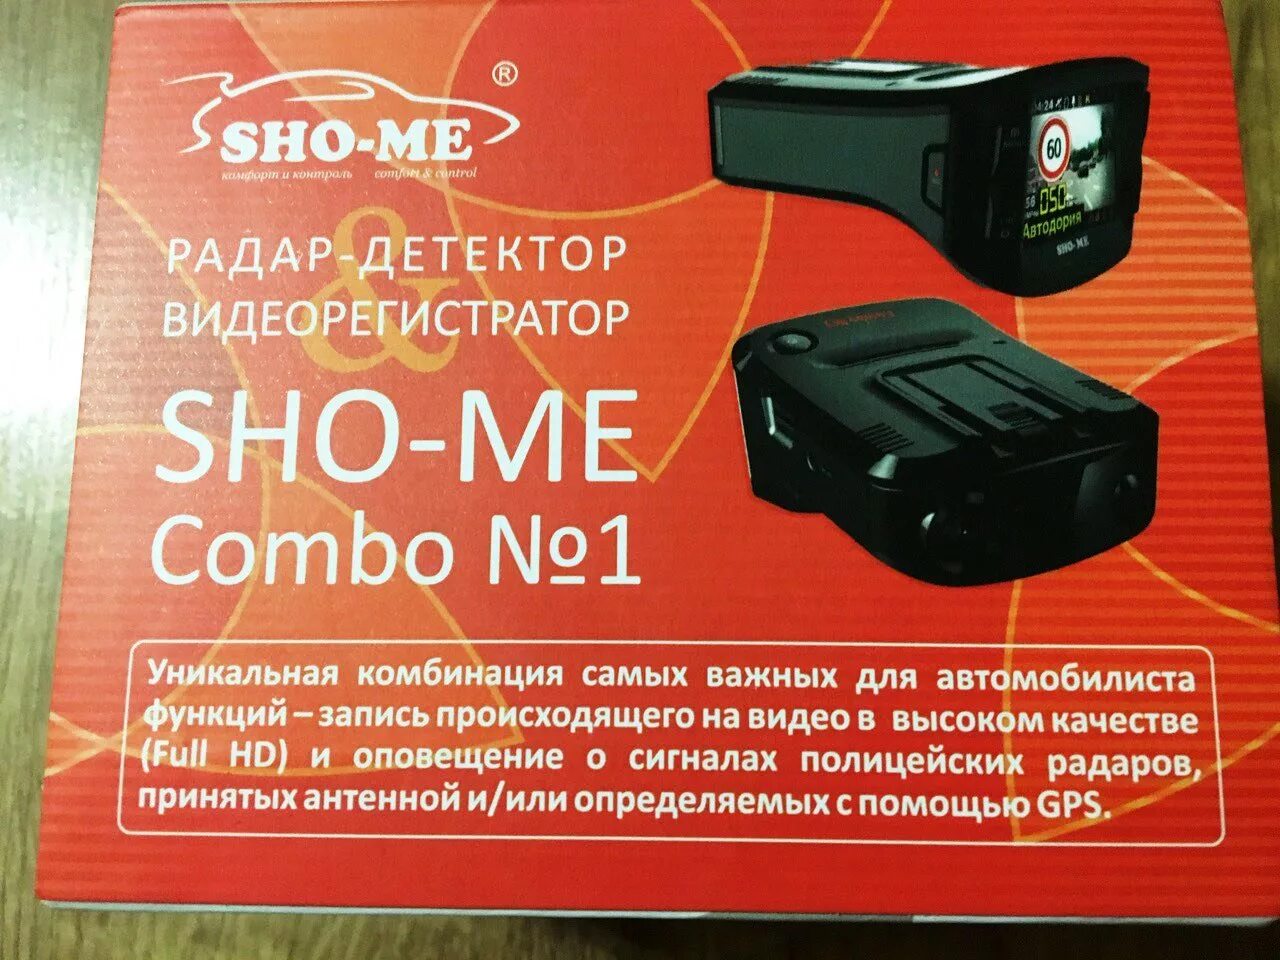 Sho-me Combo №1. Радар-детектор Sho-me 1785. Кронштейн для видеорегистратора Sho-me Combo №1. Sho me кабель питания видеорегистратор.